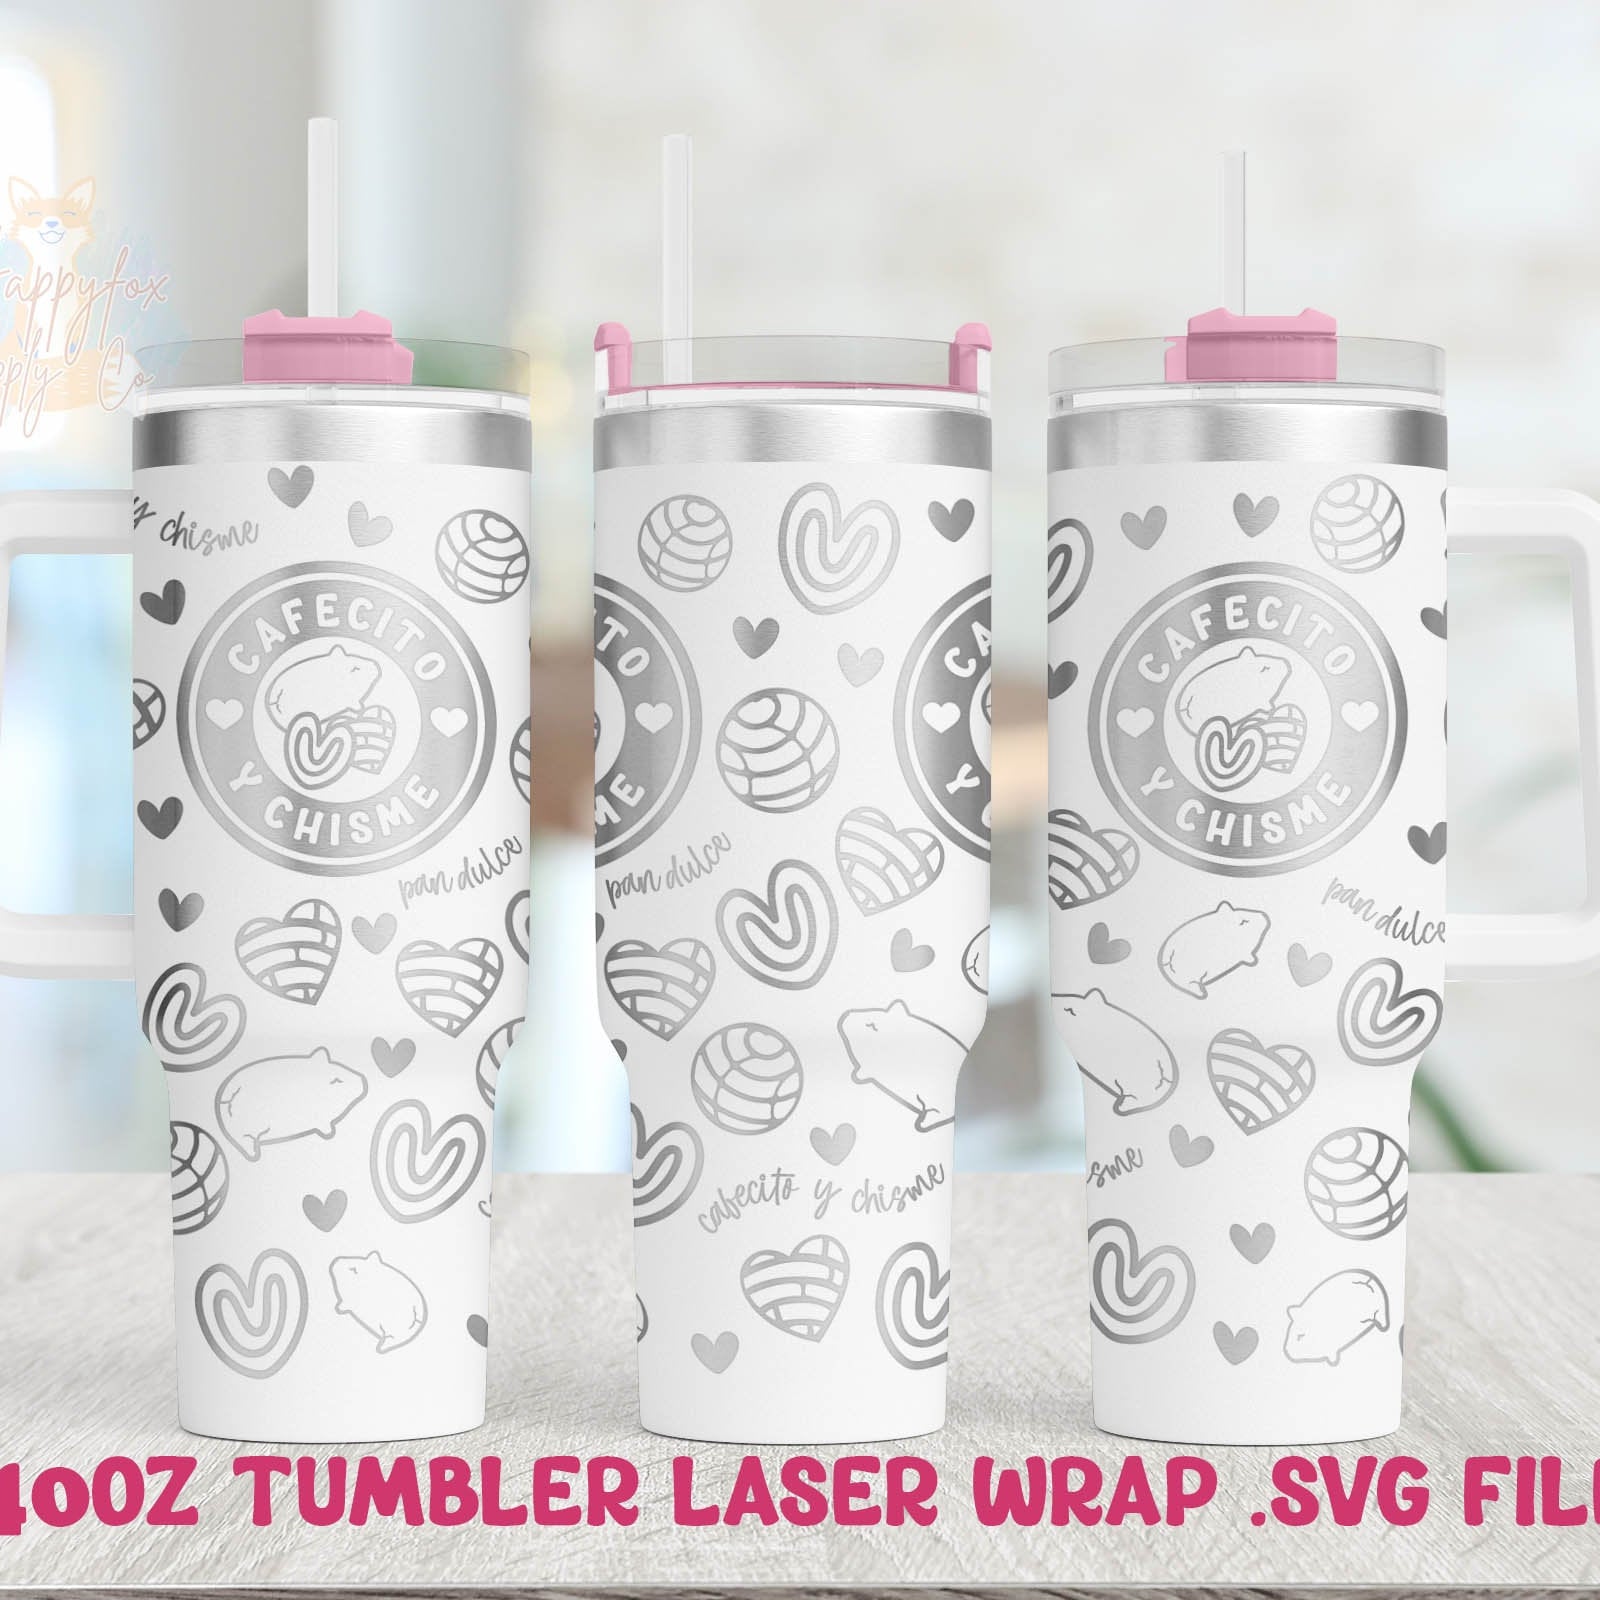 40oz Engraving .SVG File for Lasers Laser Engraved Tumbler Wrap Cafecito Y Chisme Concha Pan Dulce .SVG Tumbler Wrap